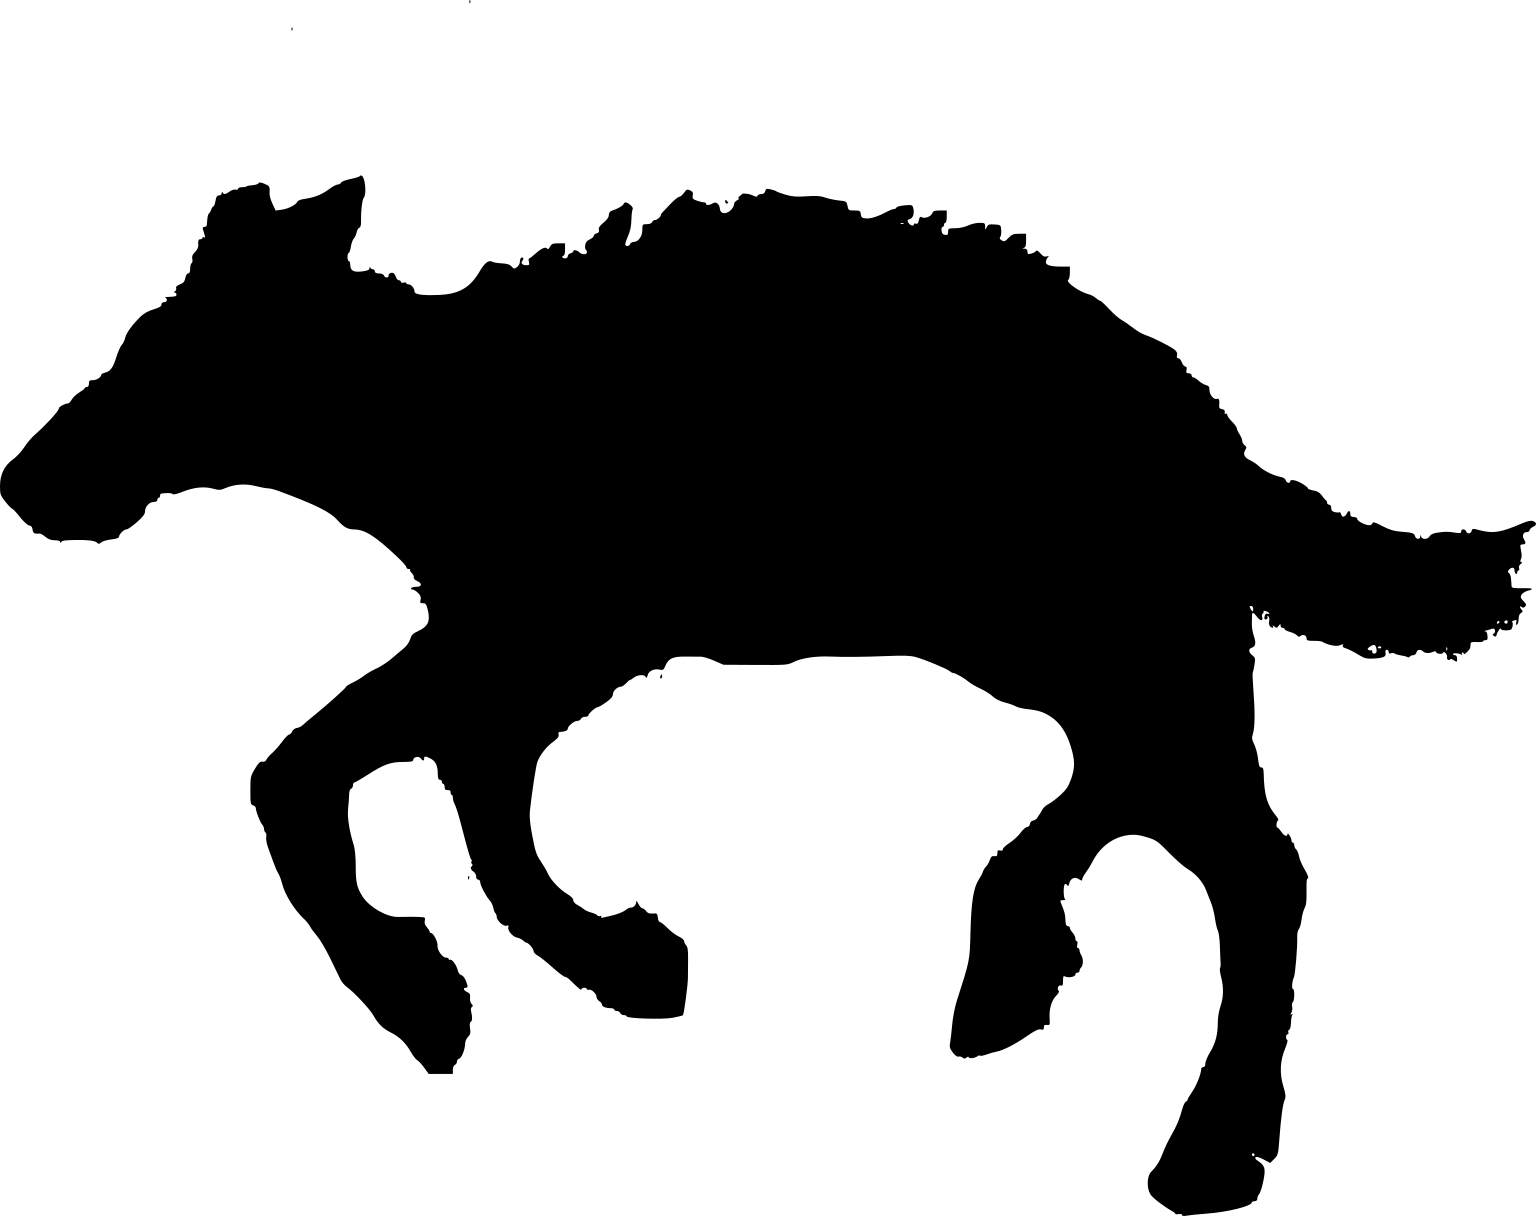 Prothoatherium colombianus